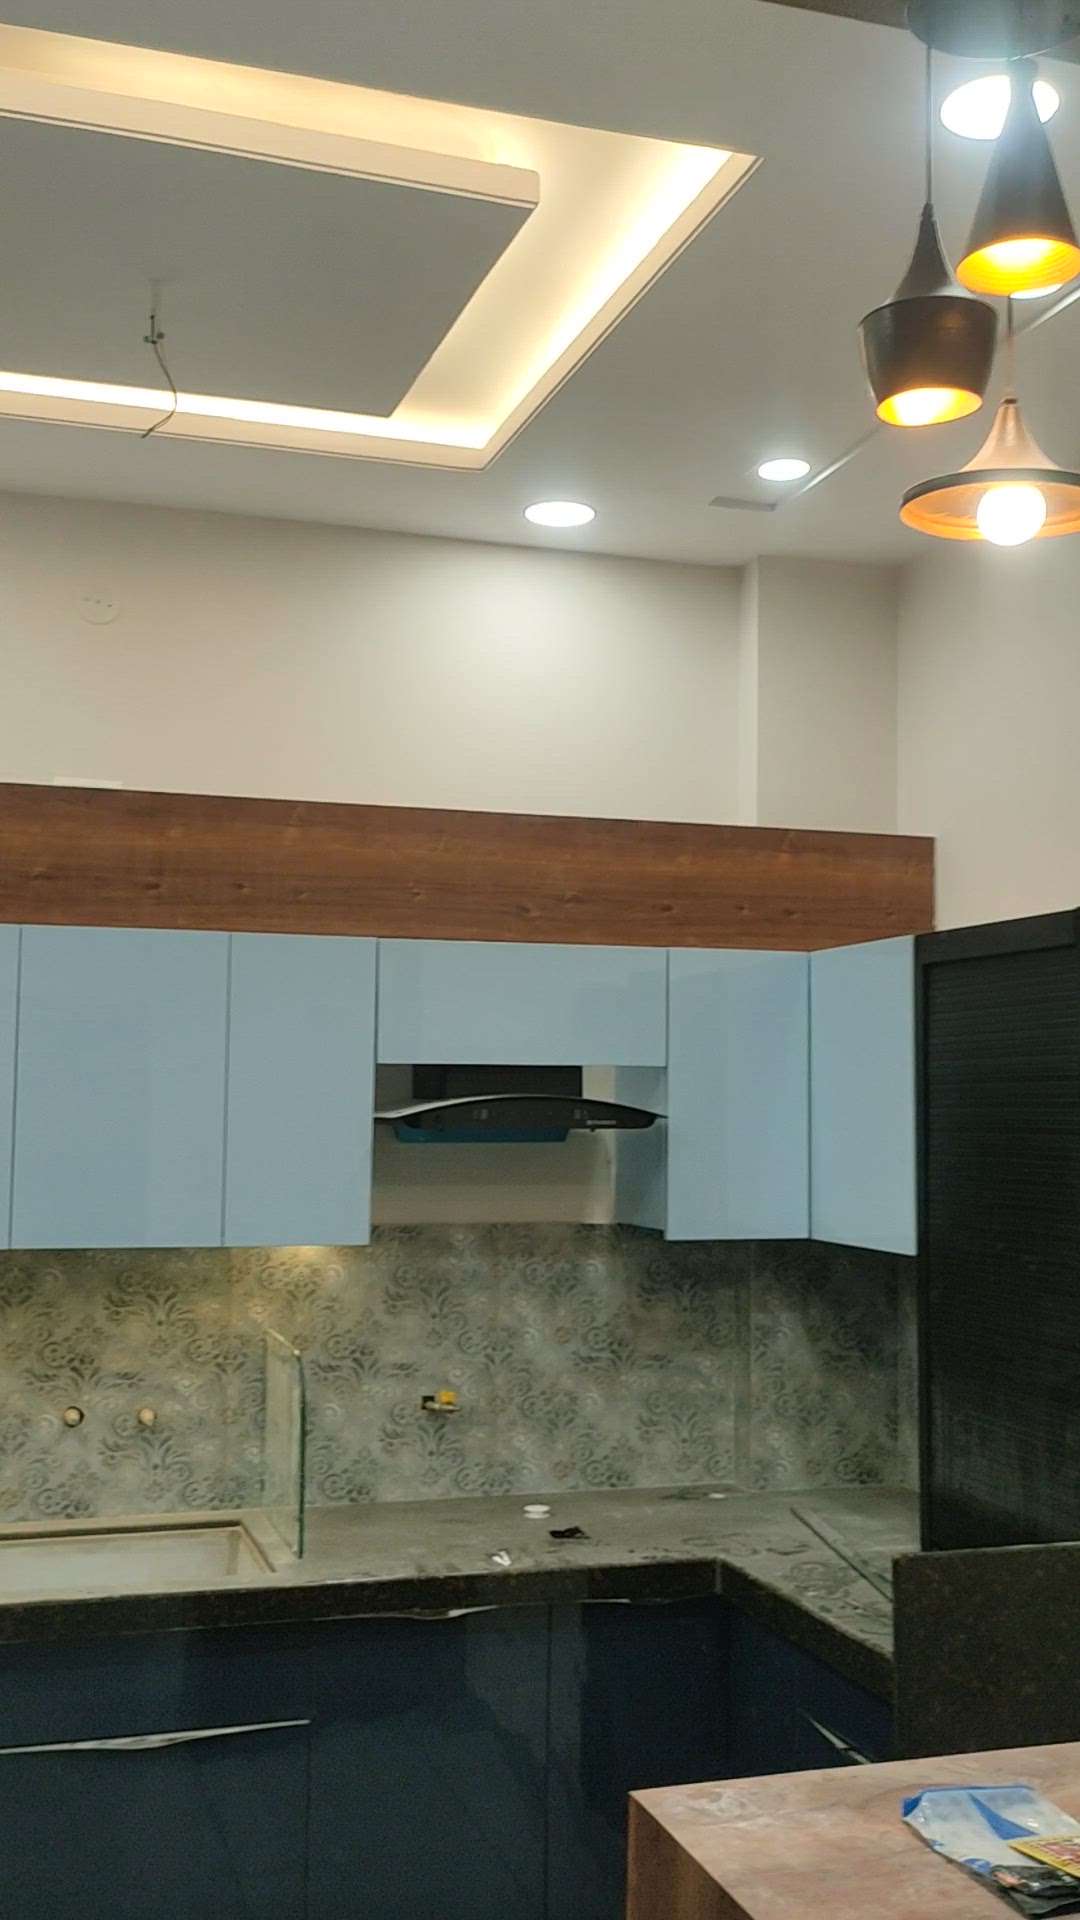 Want Modular kitchen?
Contact us :- 99299-15722

#LivingroomDesigns #LivingRoomTable #LivingRoomCarpets #LivingRoomCarpets #LivingRoomCarpets #LivingRoomPainting #architecturedesigns #Architectural&Interior #Architectural&nterior #arch #4DoorWardrobe #WardrobeIdeas #5DoorWardrobe #3DoorWardrobe #3DoorWardrobe #3DoorWardrobe #LivingroomDesigns #LivingRoomCarpets #carpentrydrawing